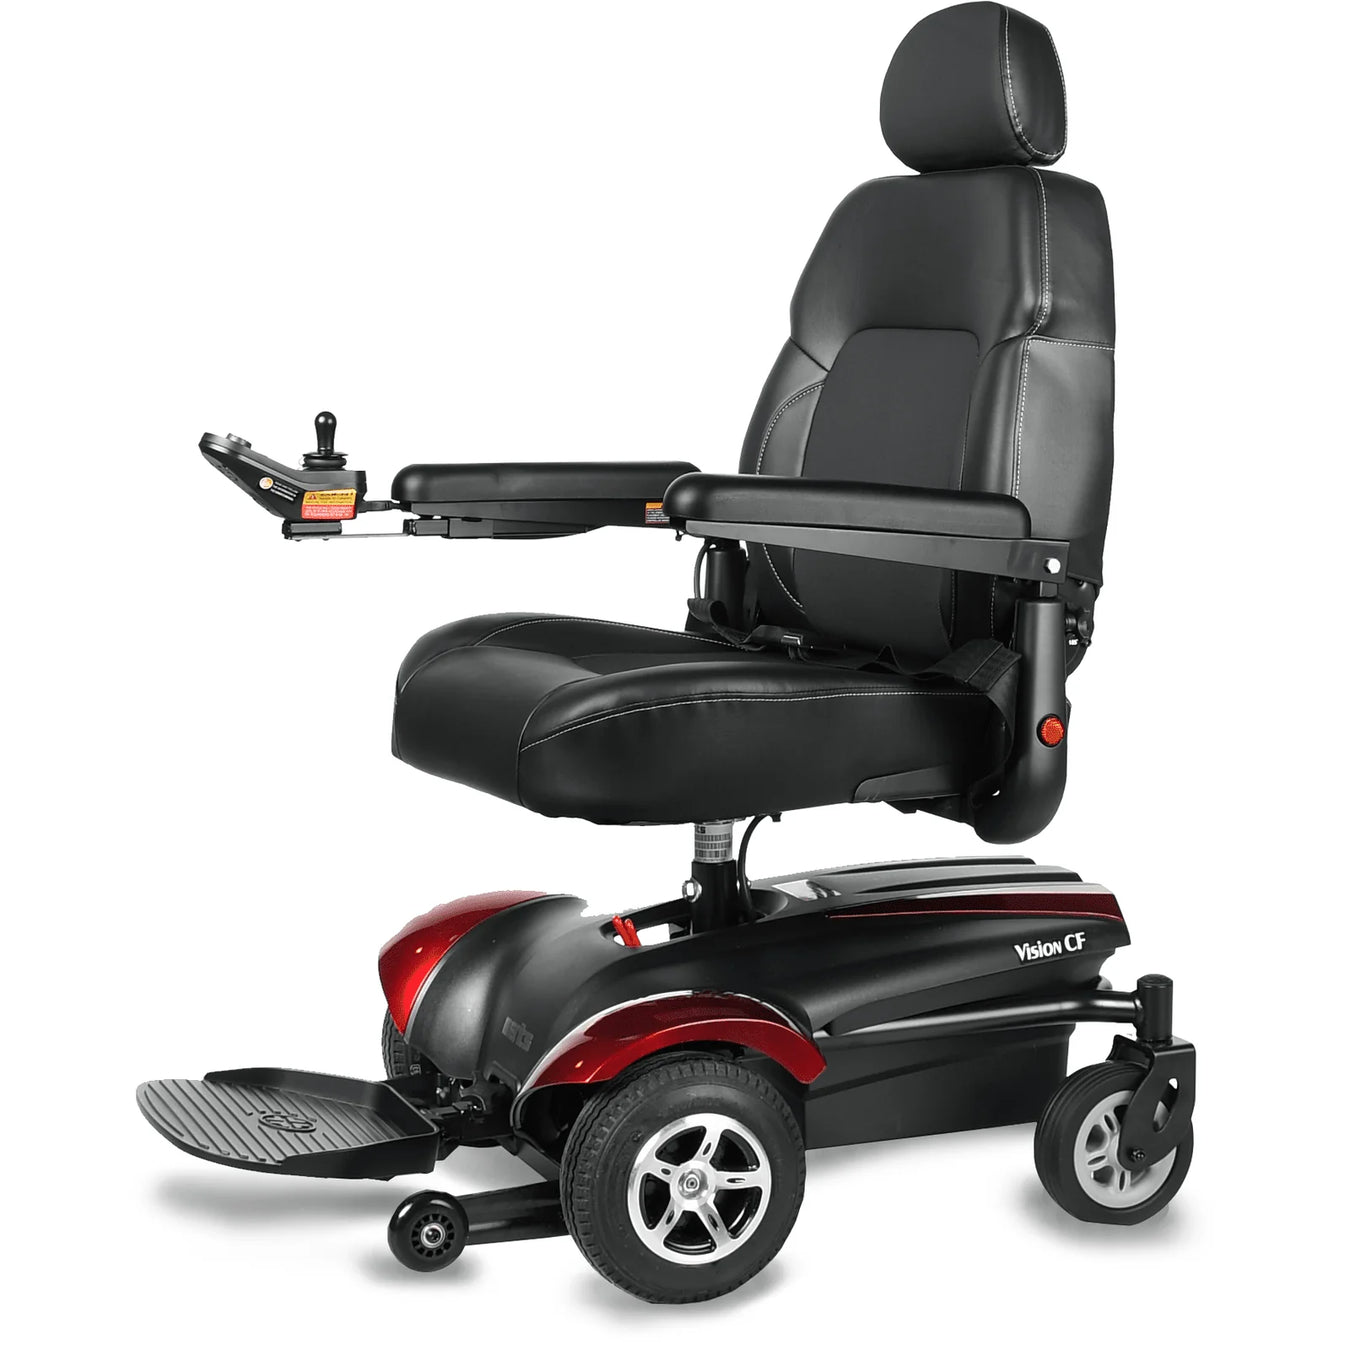 Full-Size Power Wheelchairs